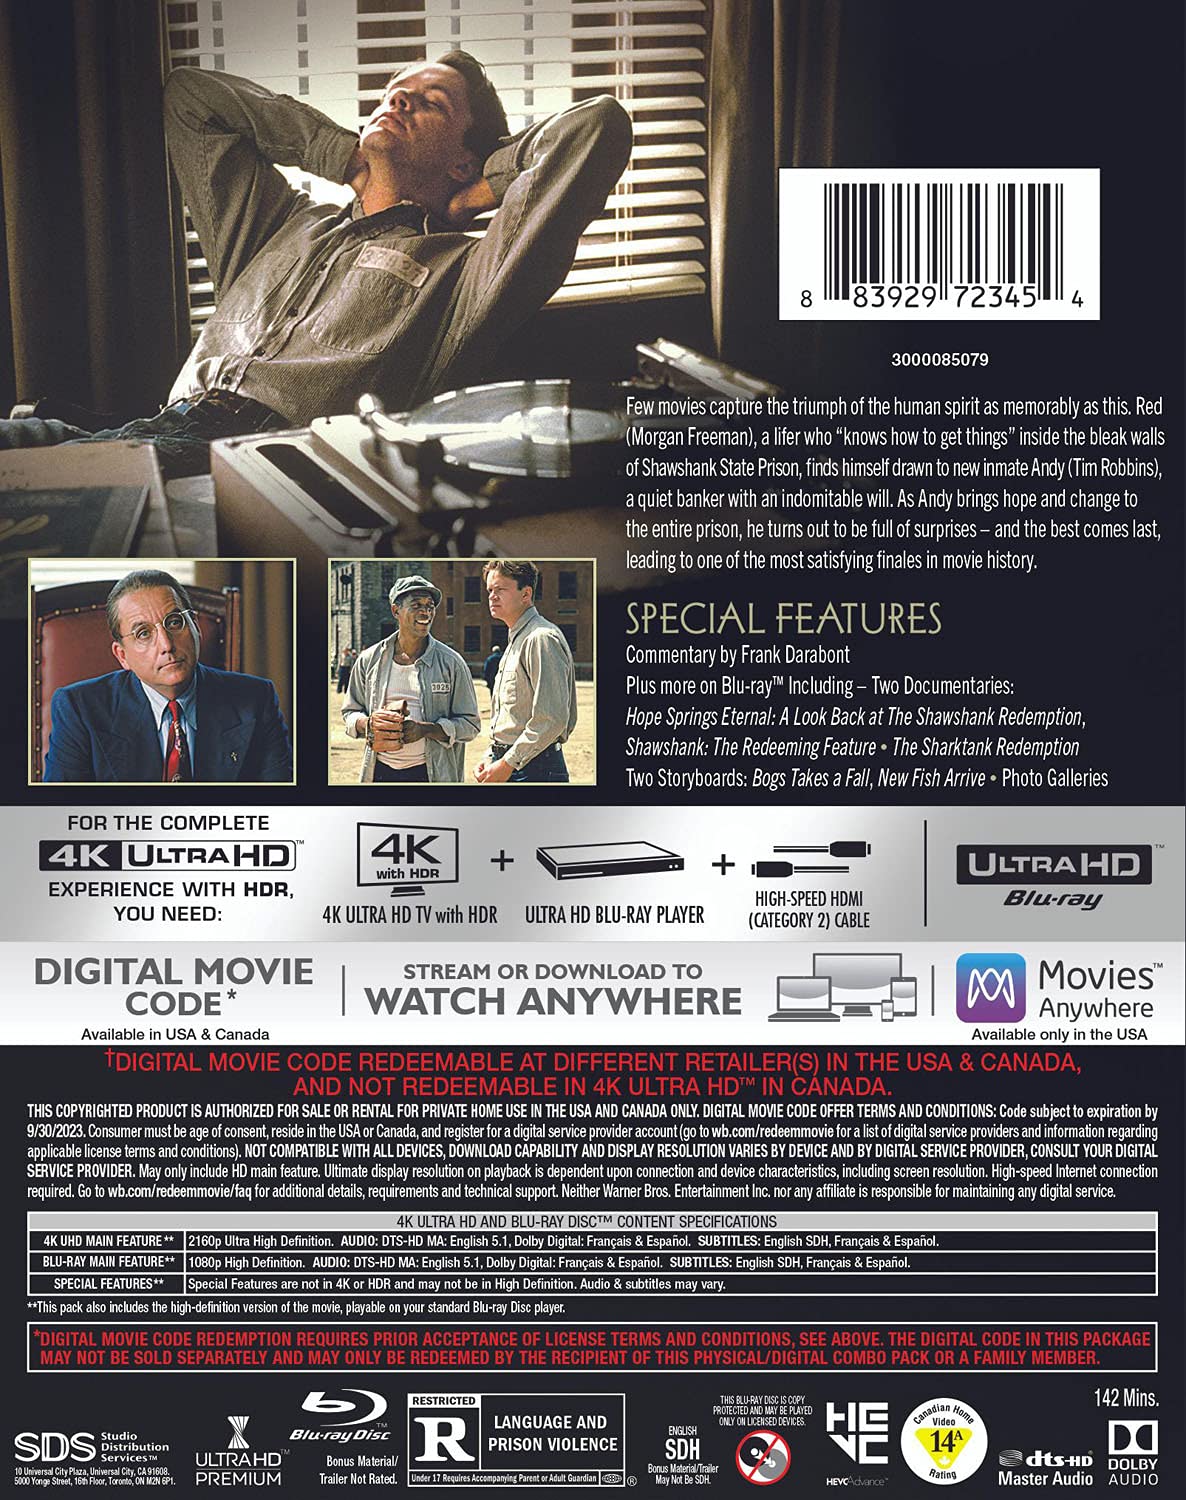 The Shawshank Redemption 4k Blu-ray back